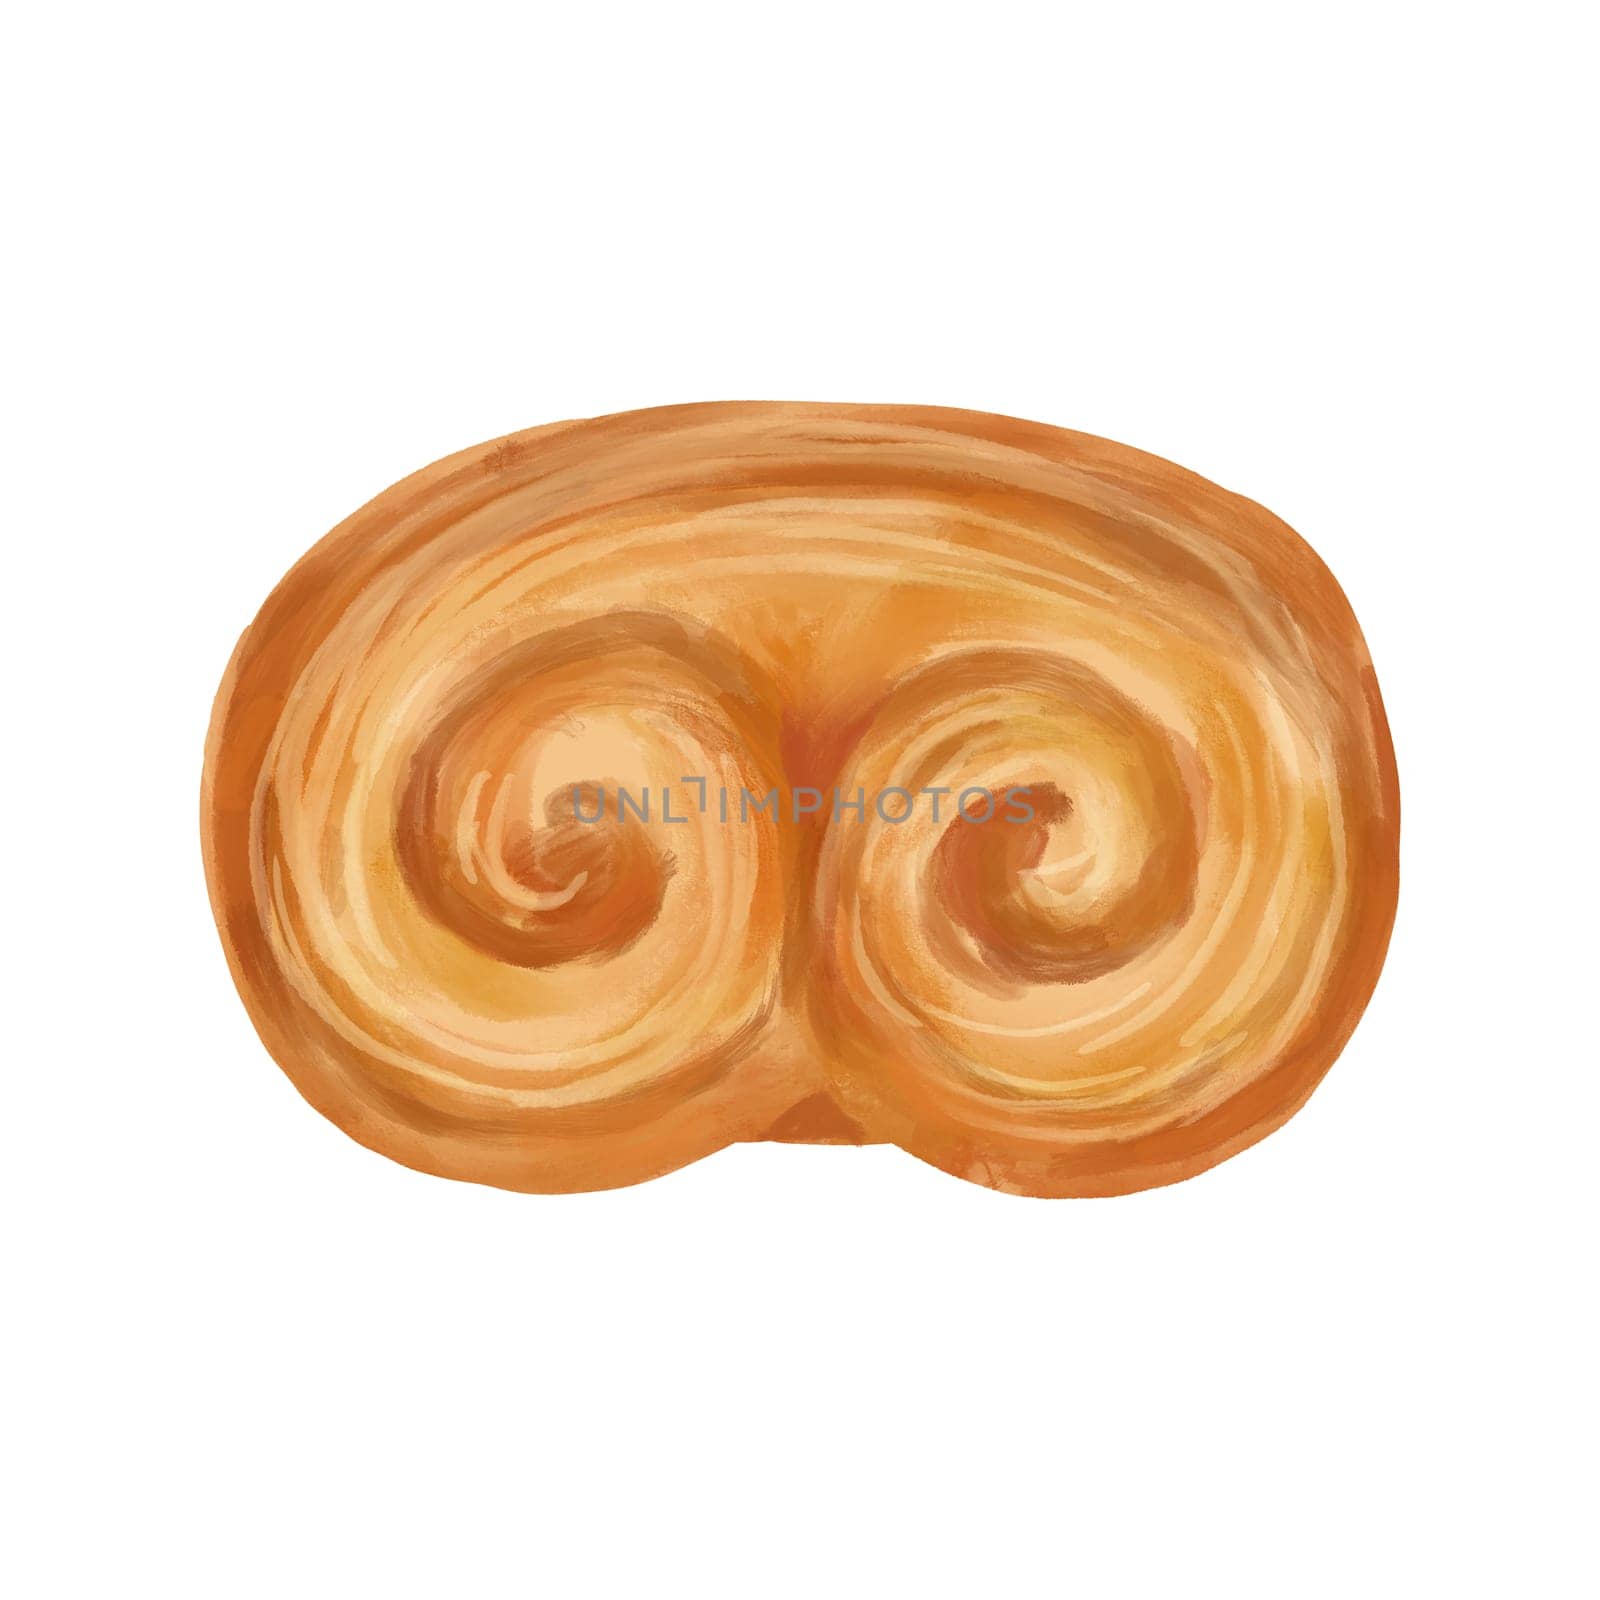 Hand drawn pretzel isolated on white background. Food illustration isolated on white. Bakery product